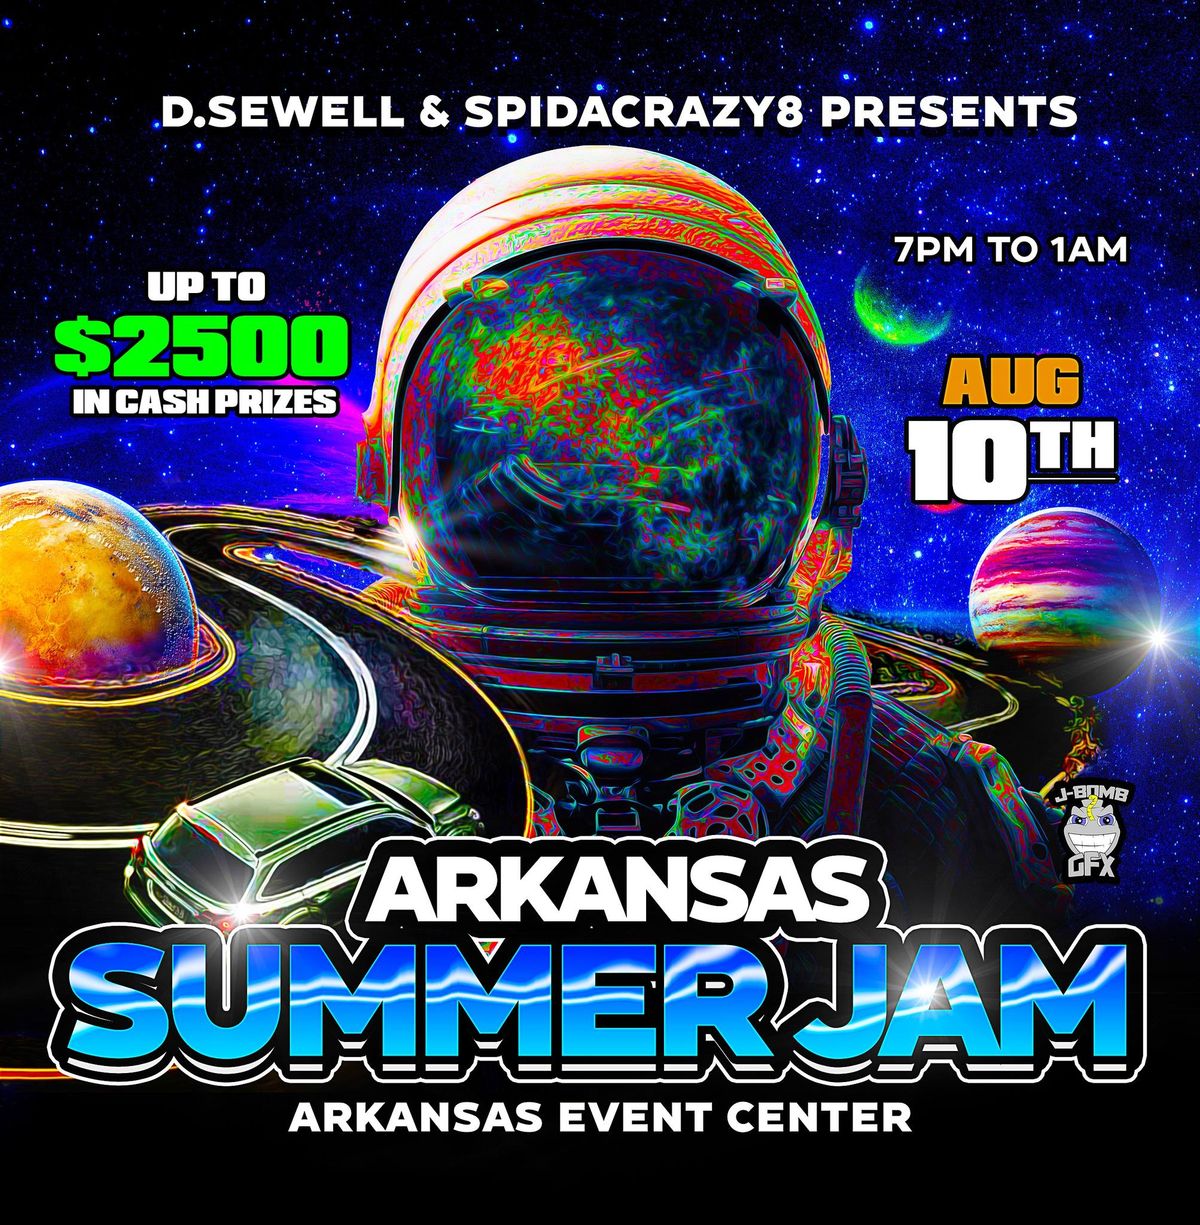 7th Annual Arkansas Summer Jam